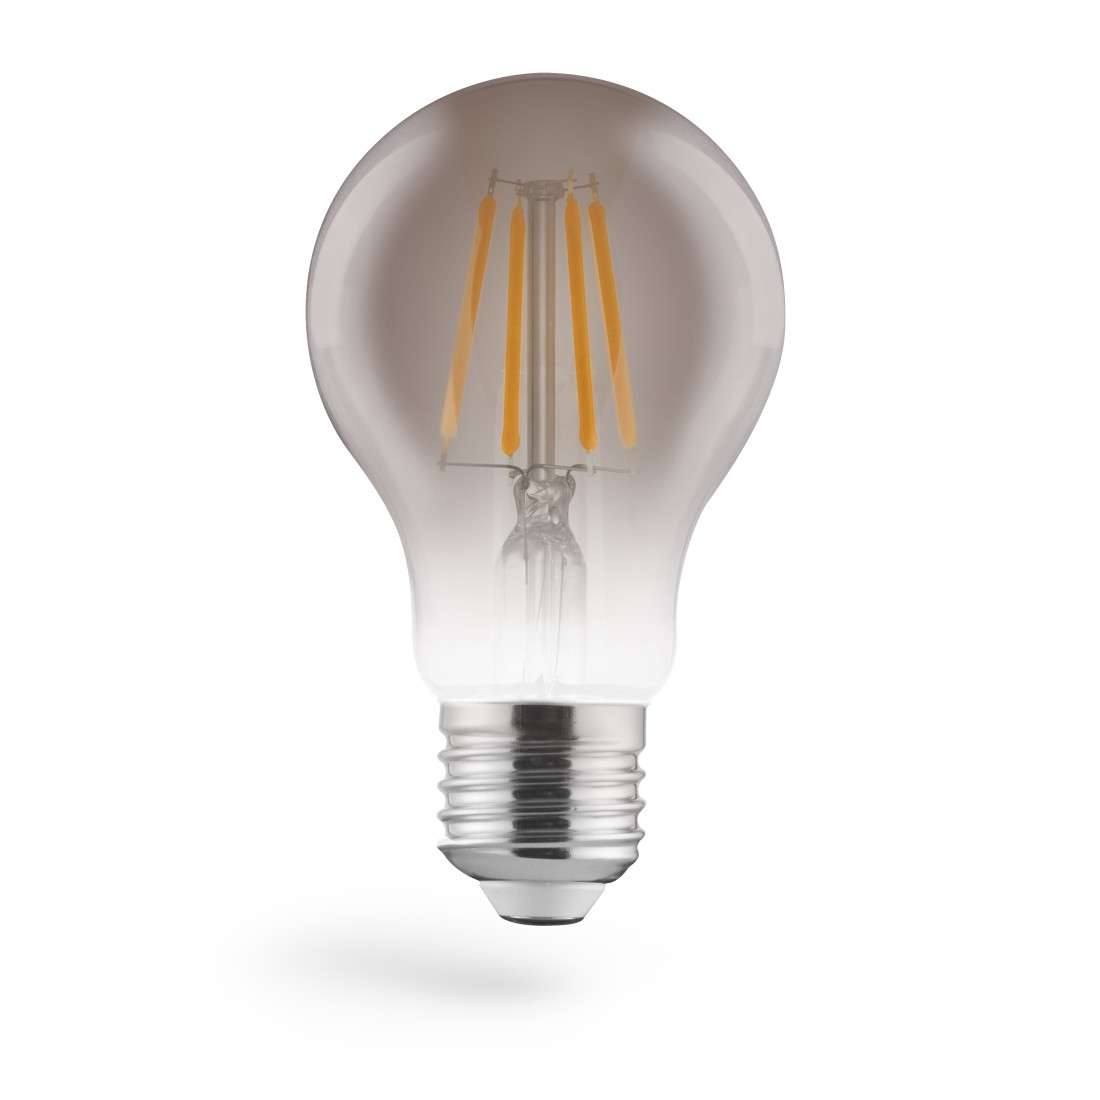 XAVAX LED-Filament, E27, 340lm 6W, Vintage-Lampe Glühlampe, Warmweiß